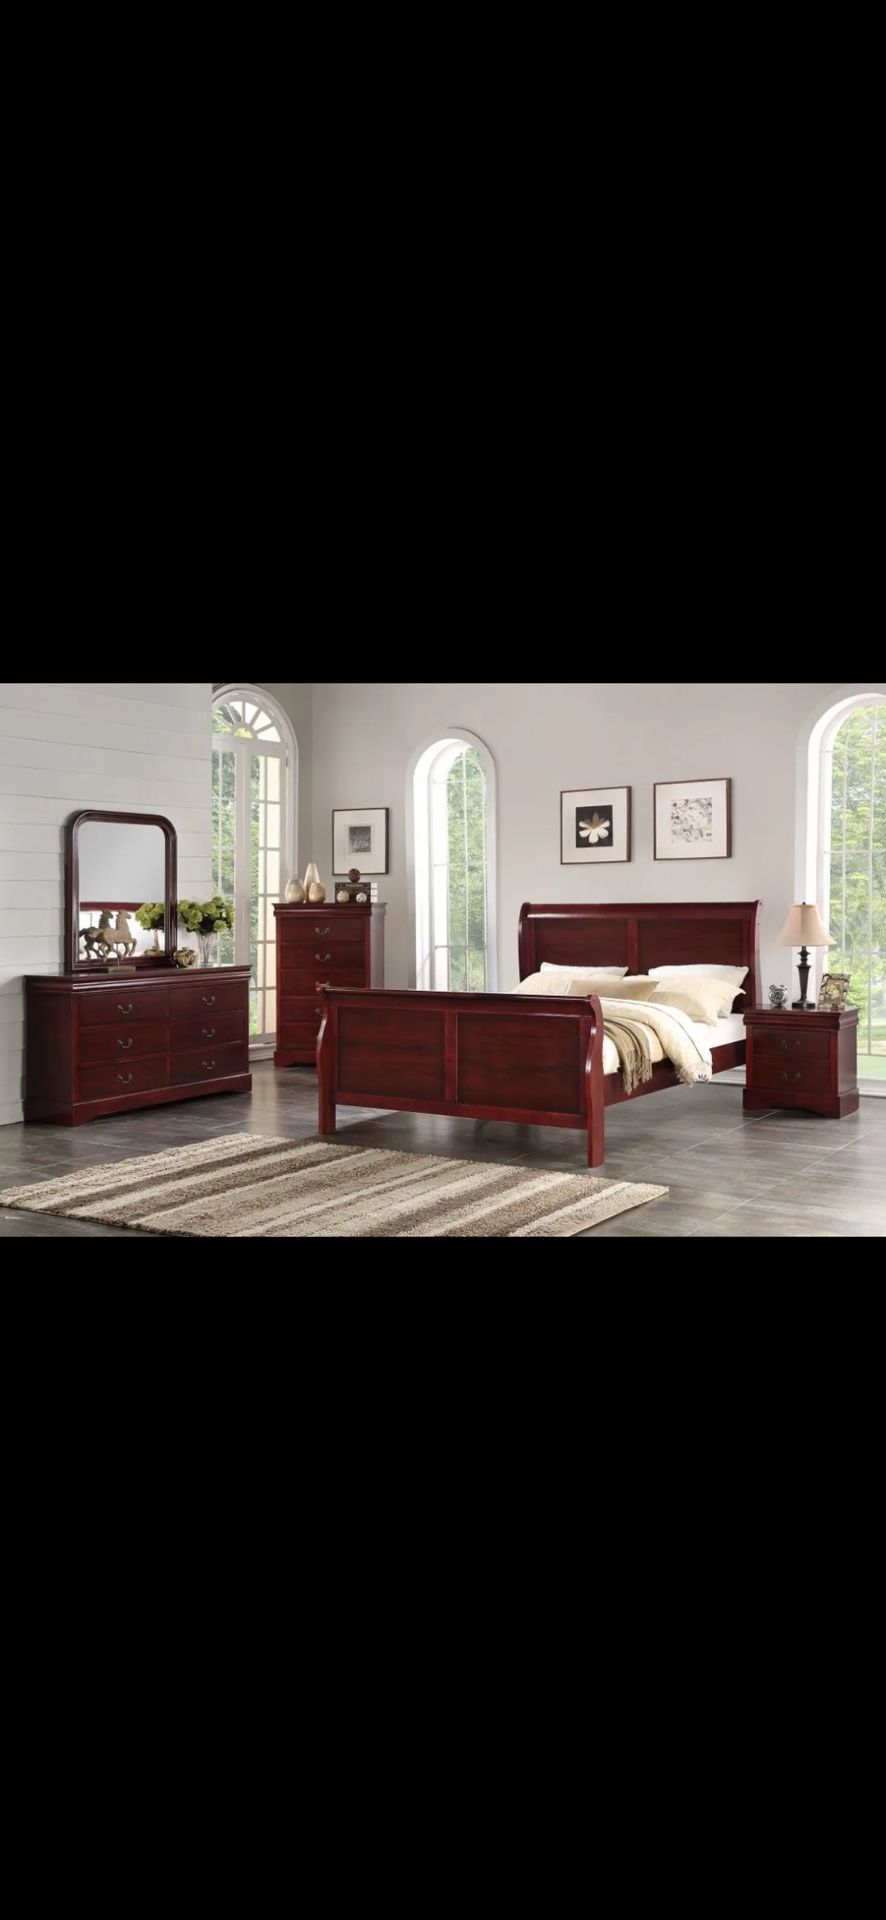 Brand New Complete Bedroom Set For $699